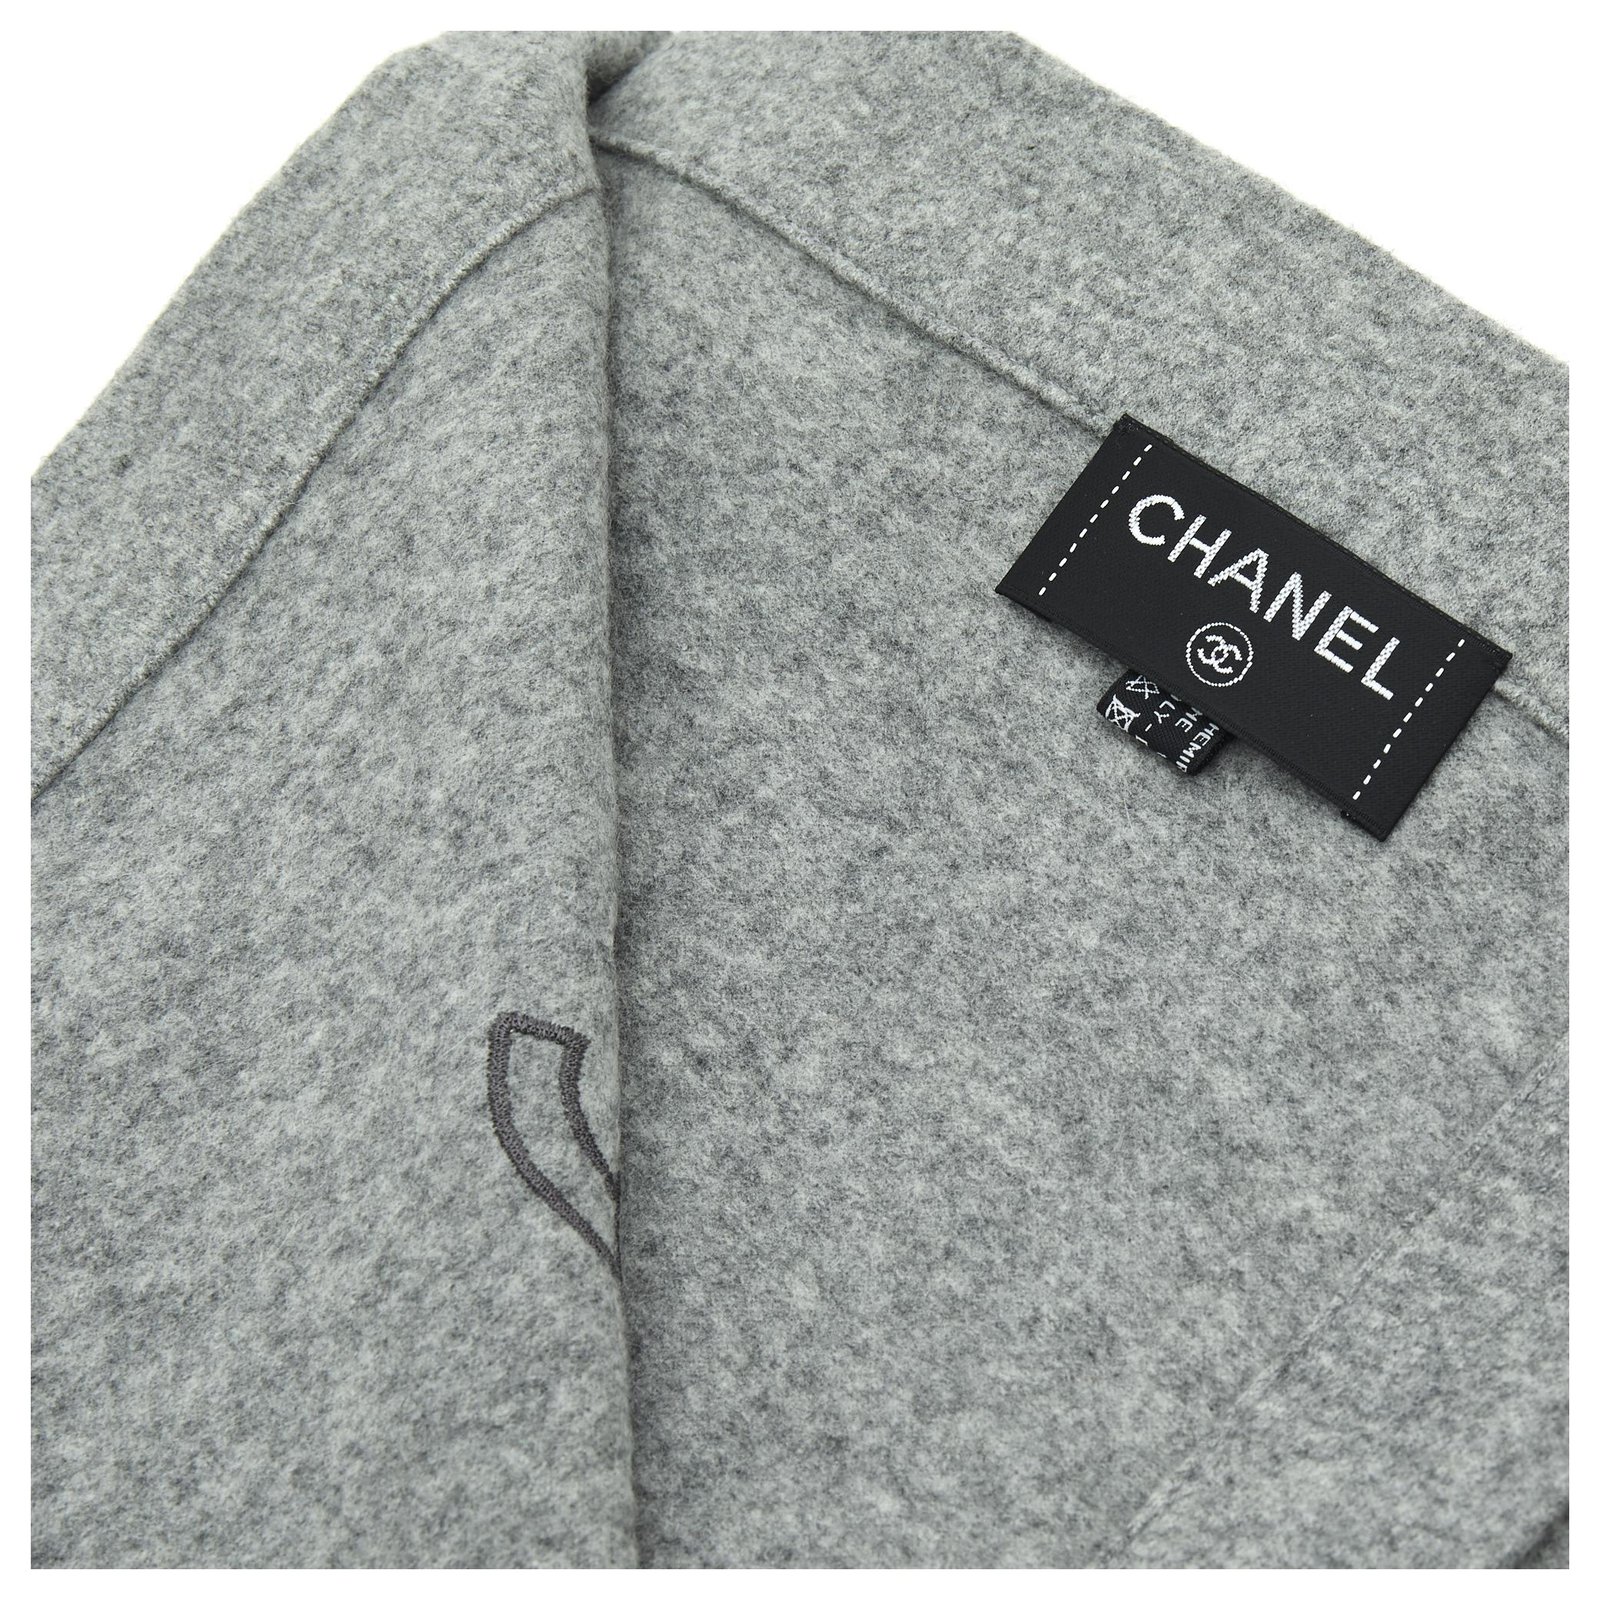 Second hand Chanel - Joli Closet